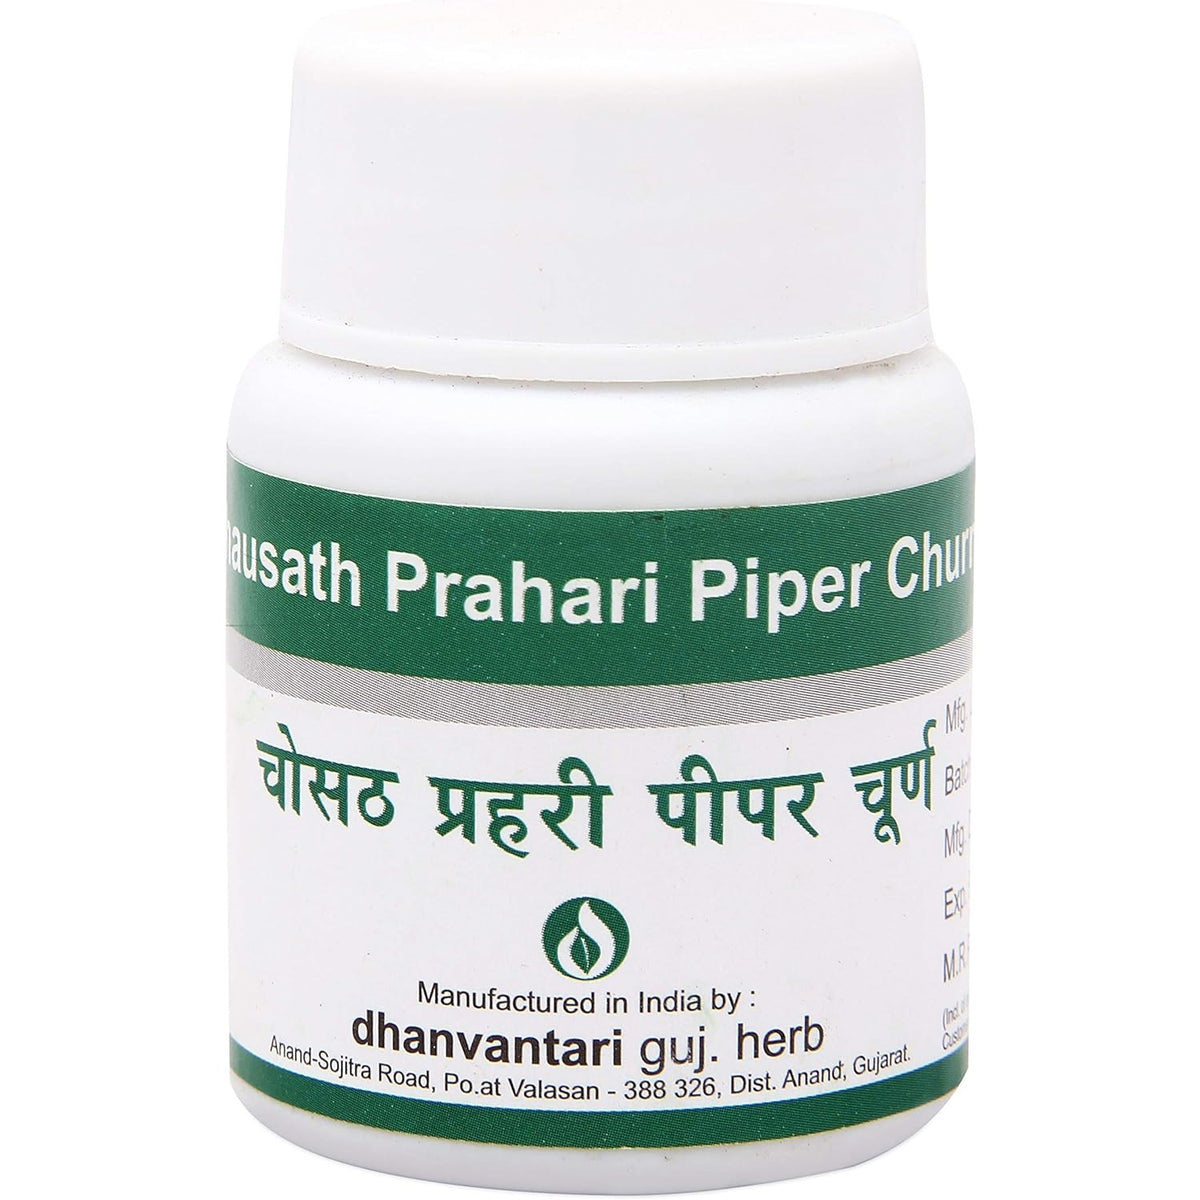 Dhanvantari Ayurvedic Chausath Prahari Piper Churna Useful In Cough & Asthma Indigestion Powder